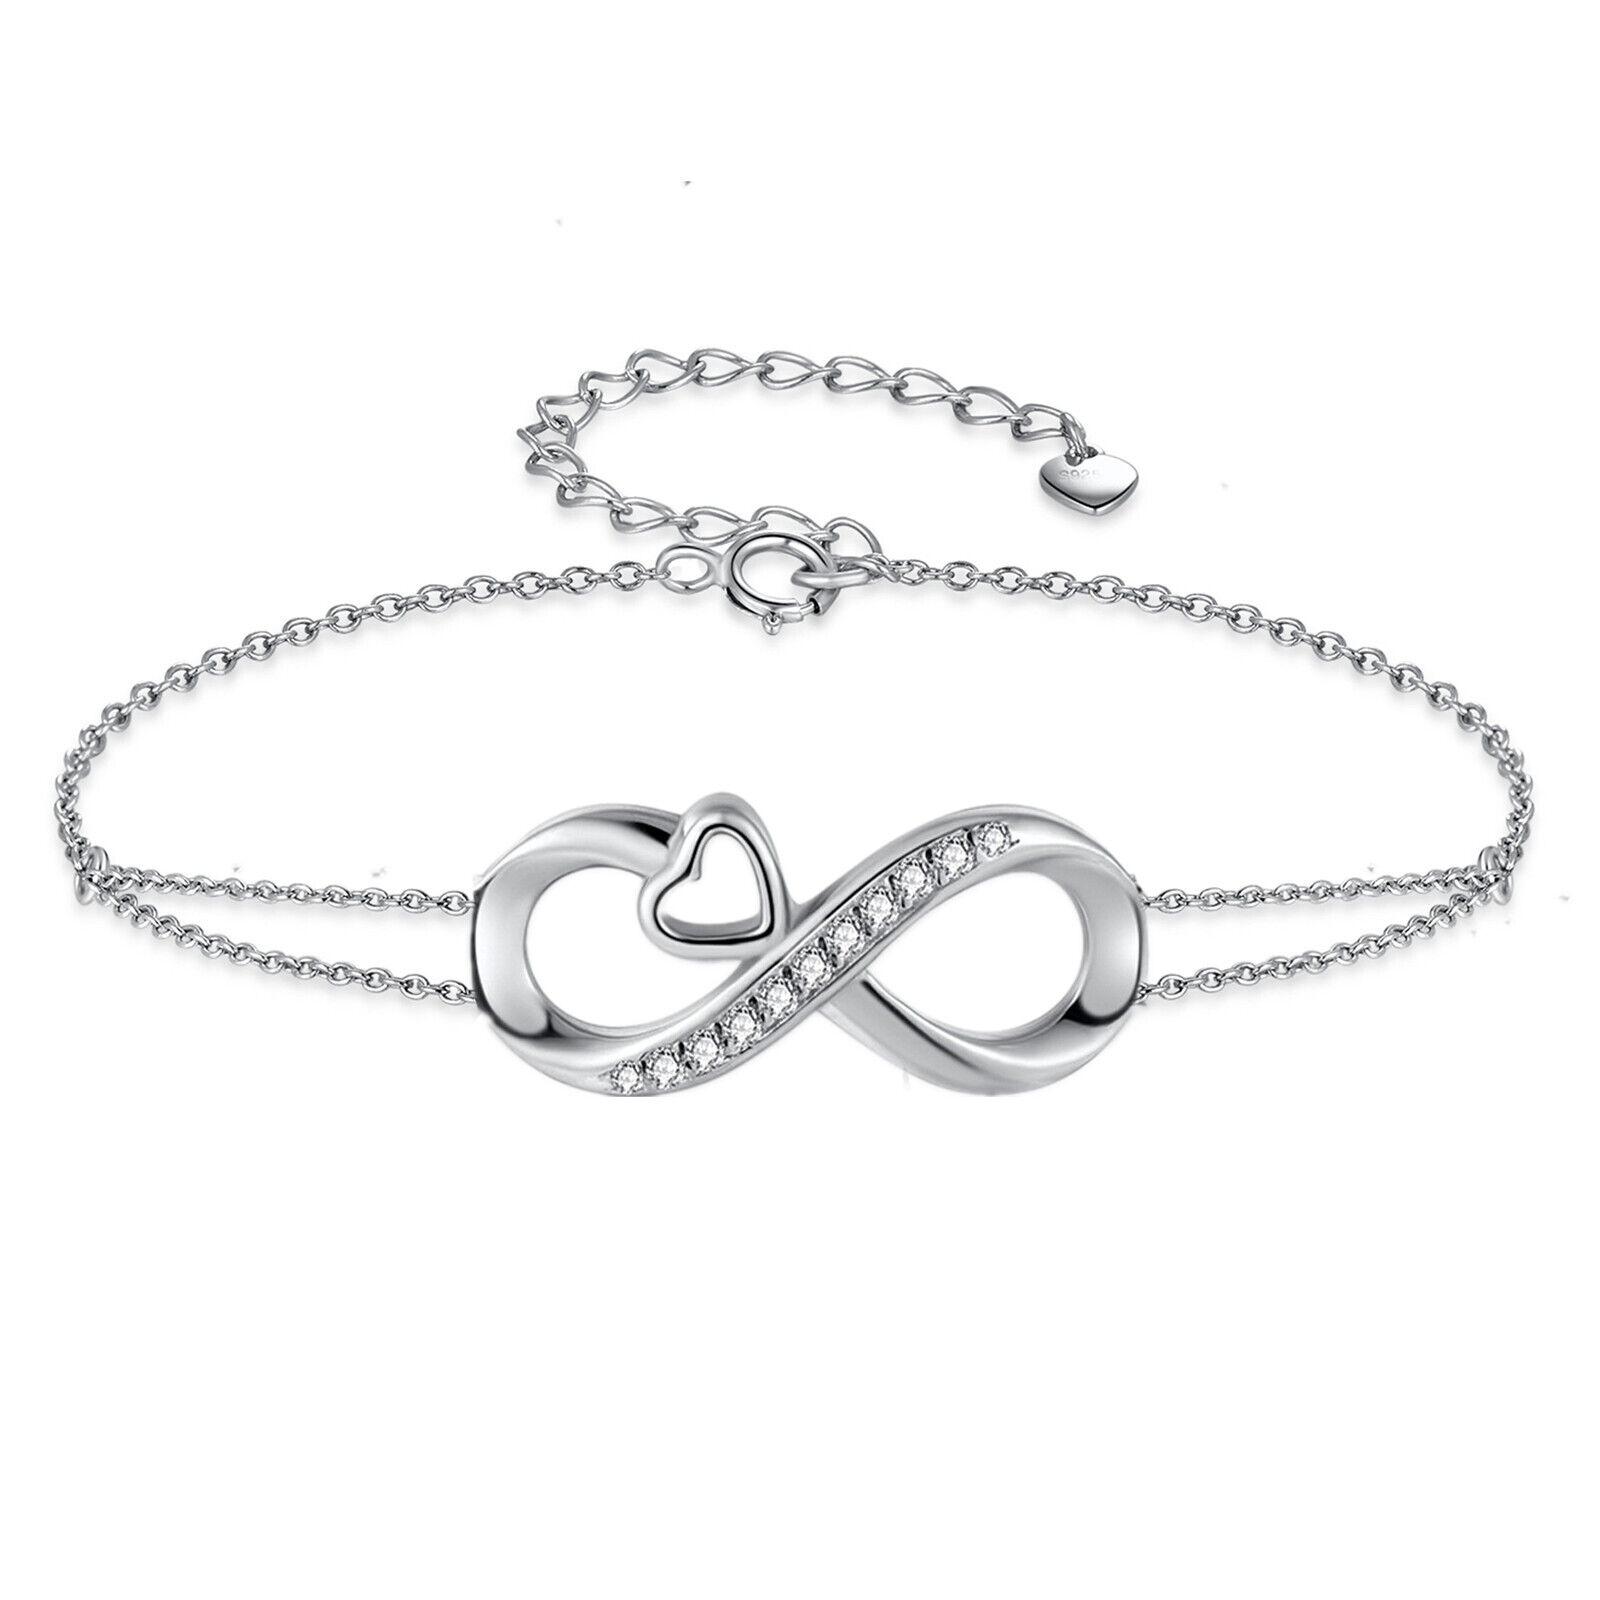 Real 925 Sterling Silver Adjustable Bracelet Infinity Heart Gifts for Her Him